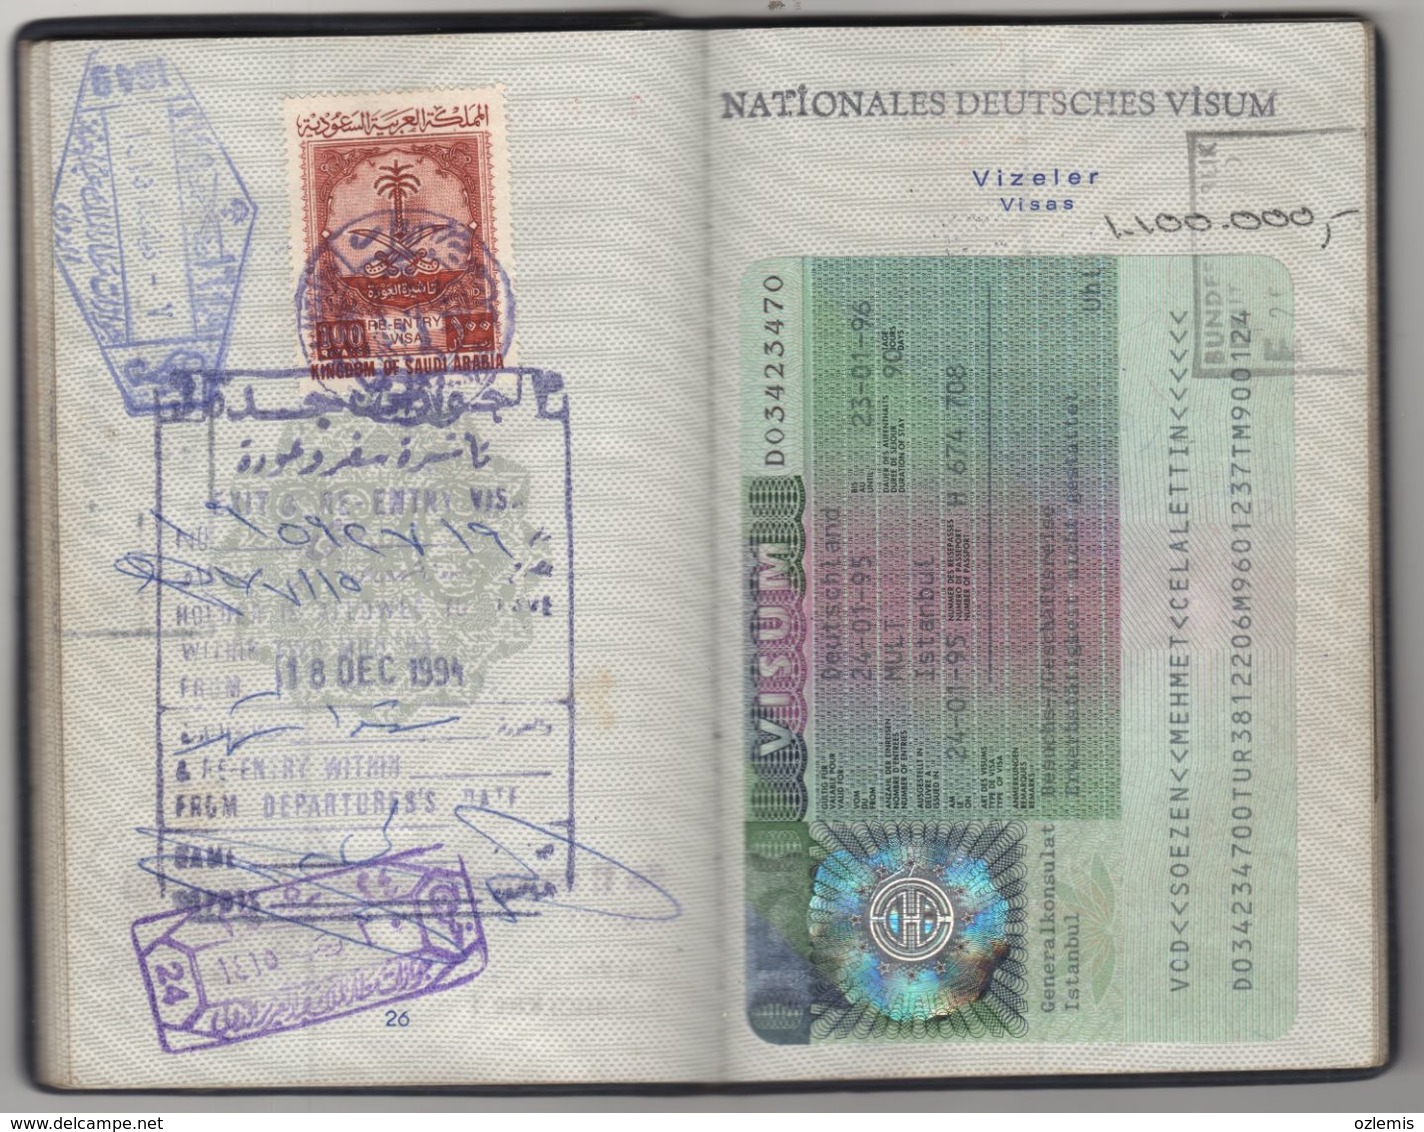 1989 PASSPORT, PASSEPORT ,ITALIA , ENGLAND,FINLAND,USA,GERMANY,SUOSSE,EGYPT,SAUDI ARABIA VİSA AND FISCALS